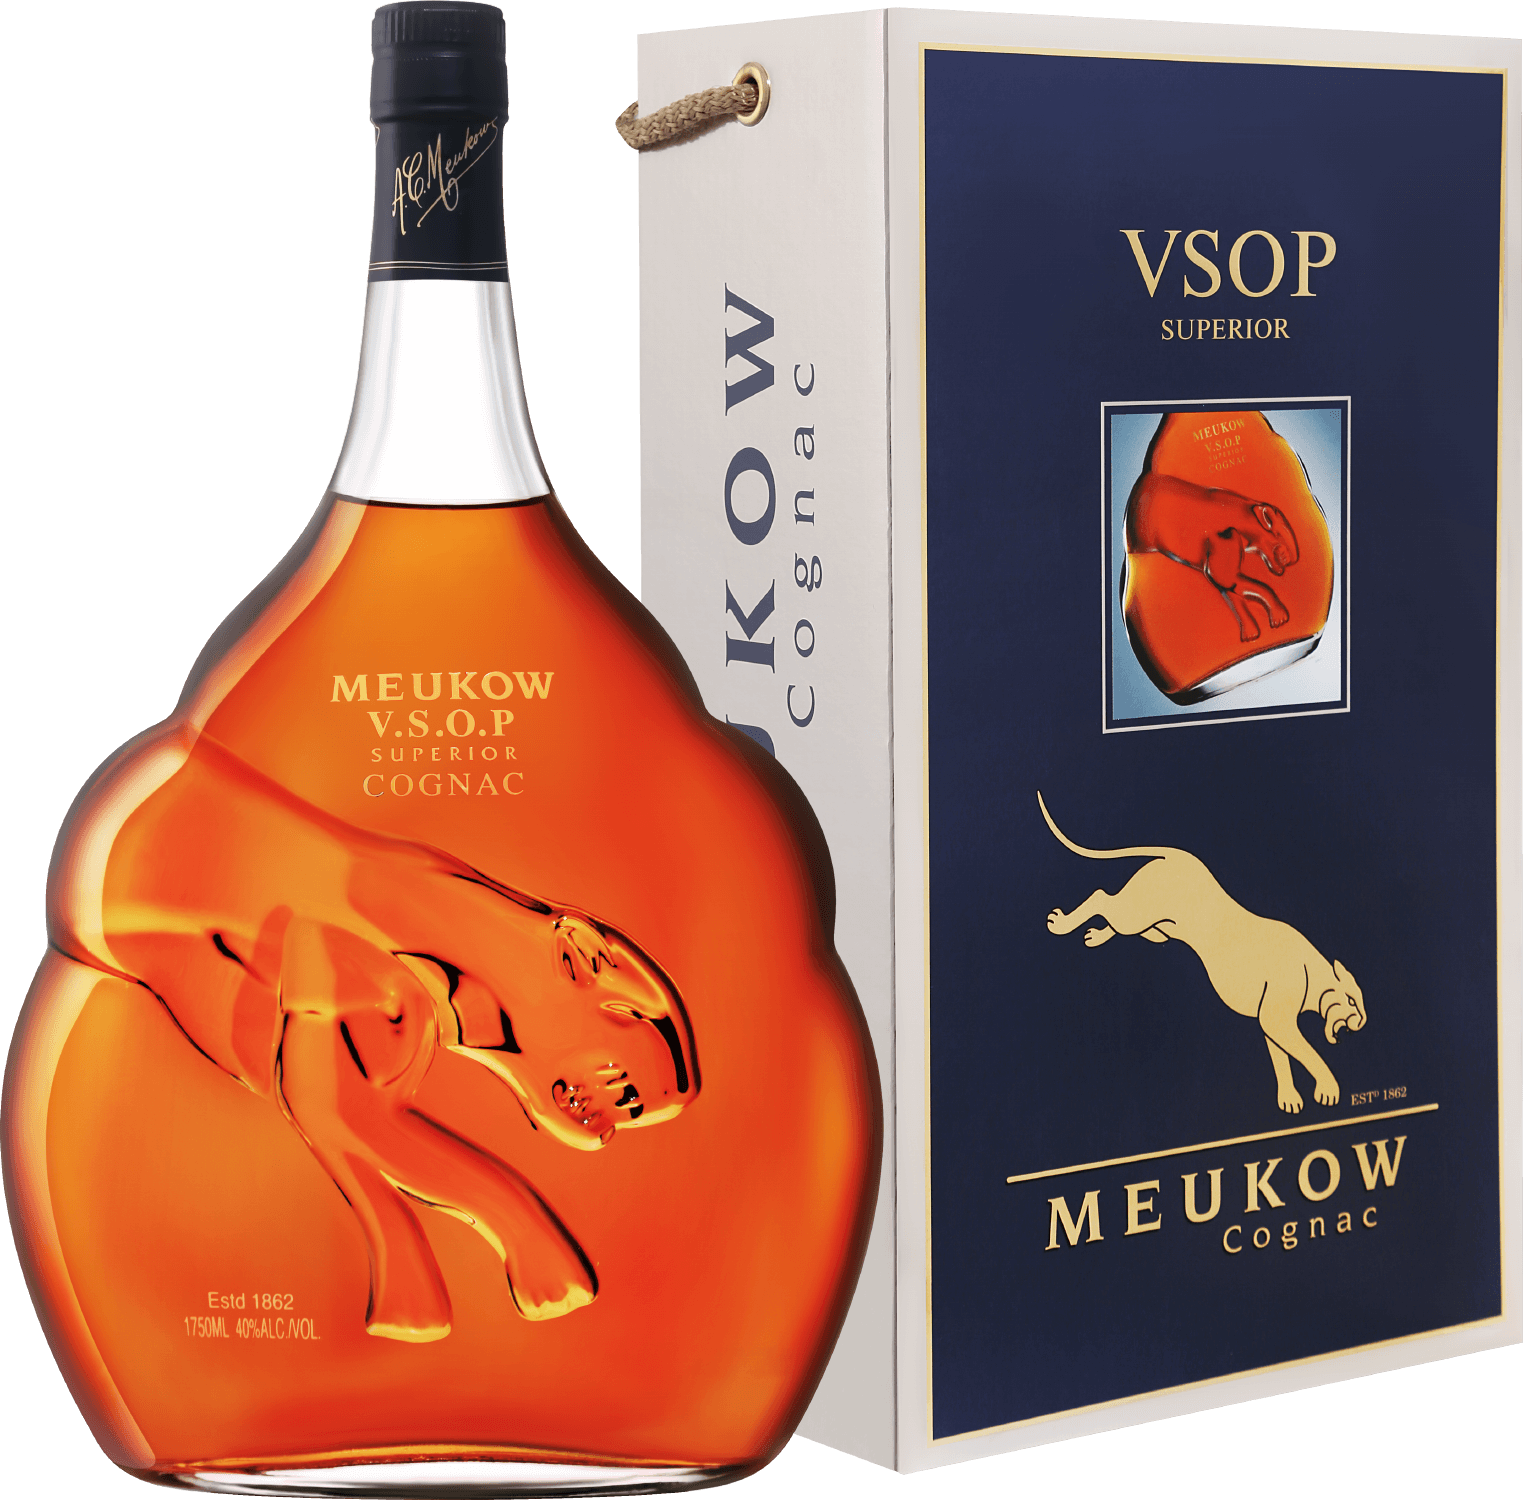 Meukow Cognac VSOP Superior (gift box) roullet cognac vsop gift box